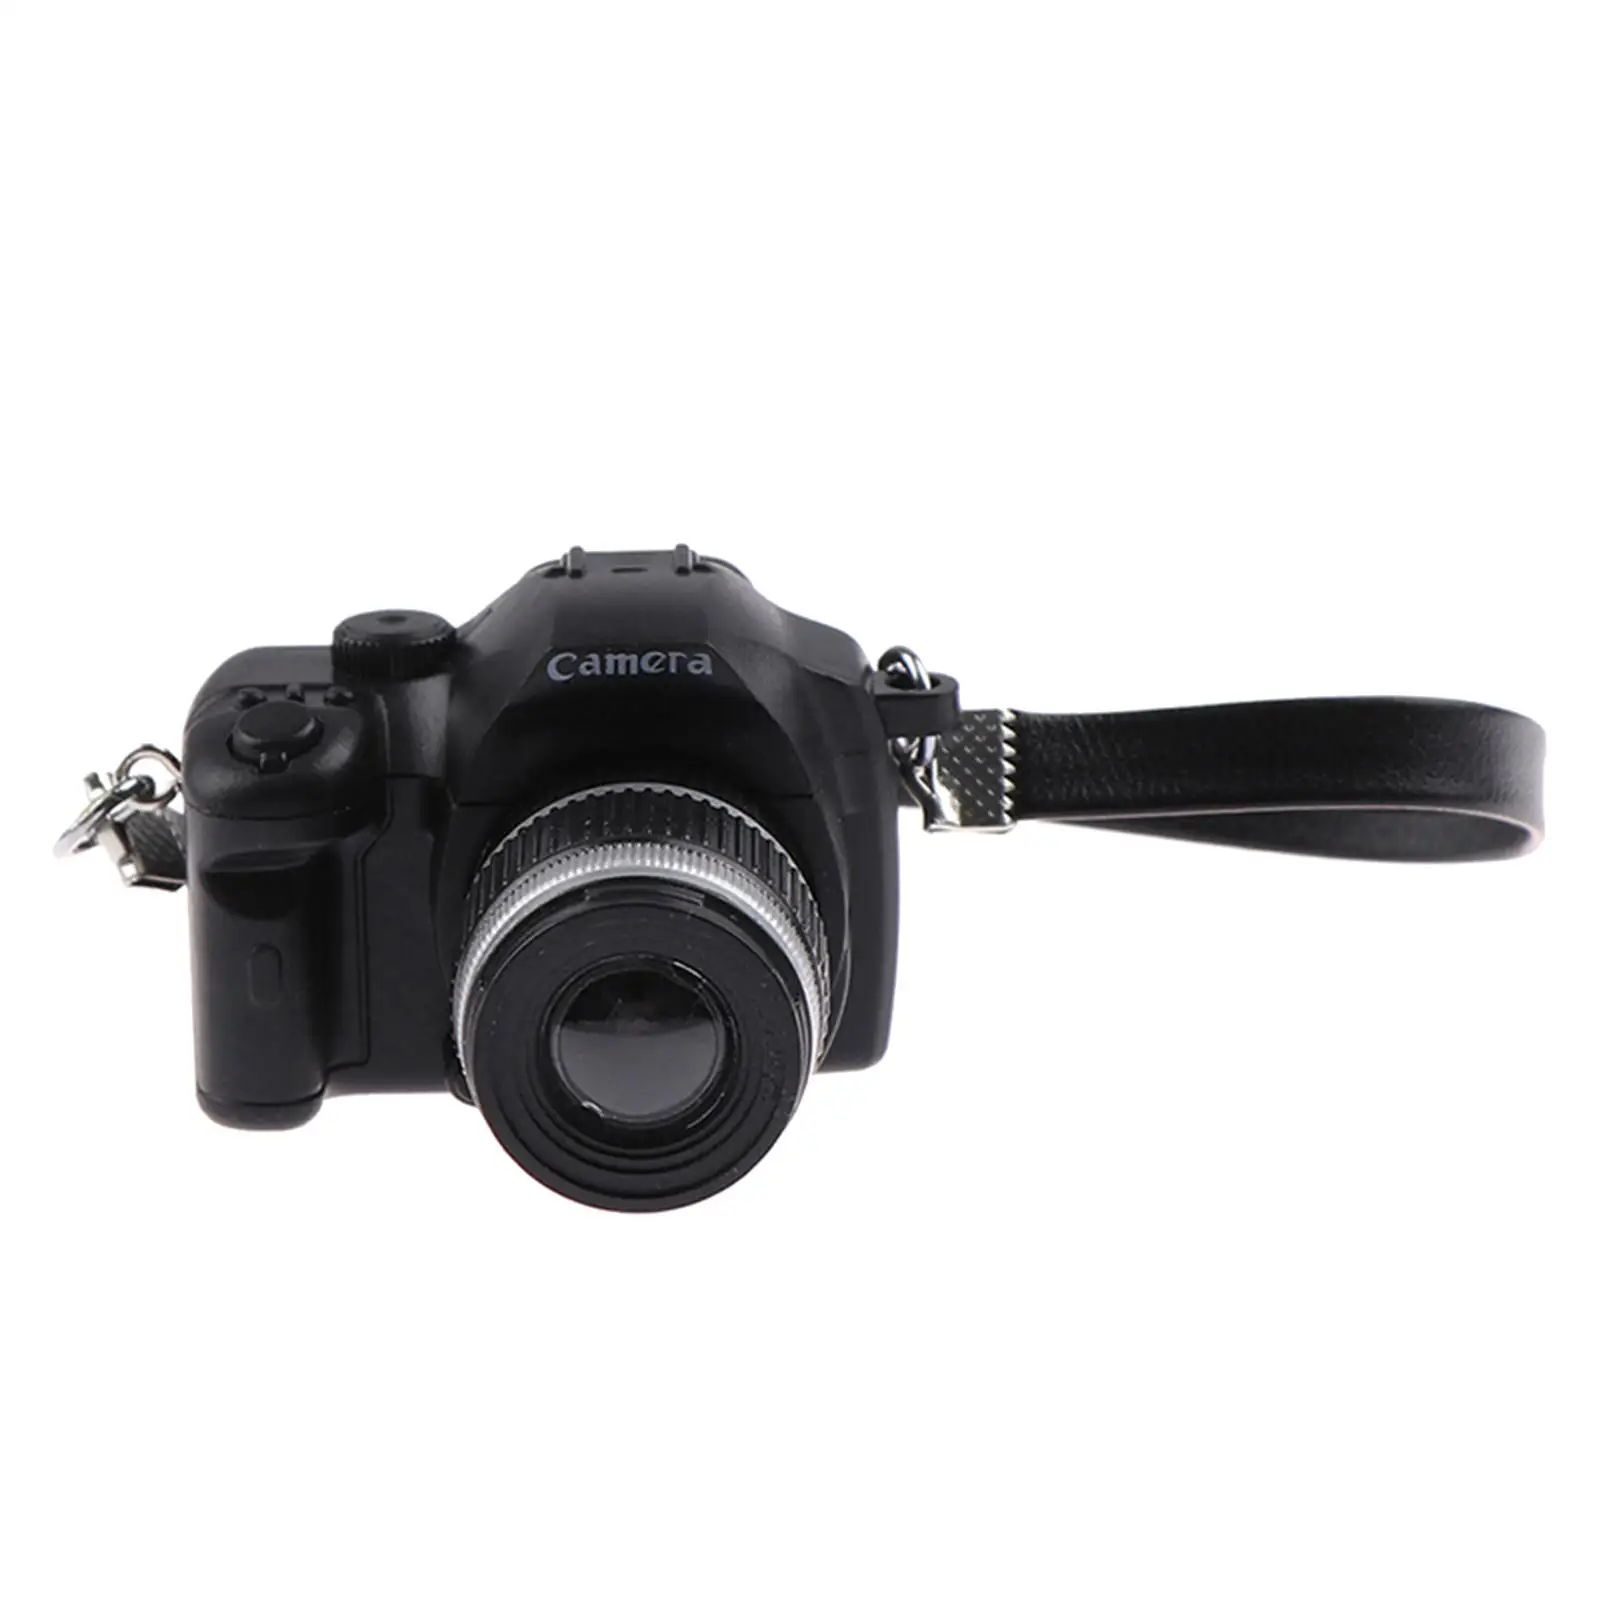 2x Miniature Digital Camera Model, 1:12 Slr Decorative Photographic Accessories for Dollhouse